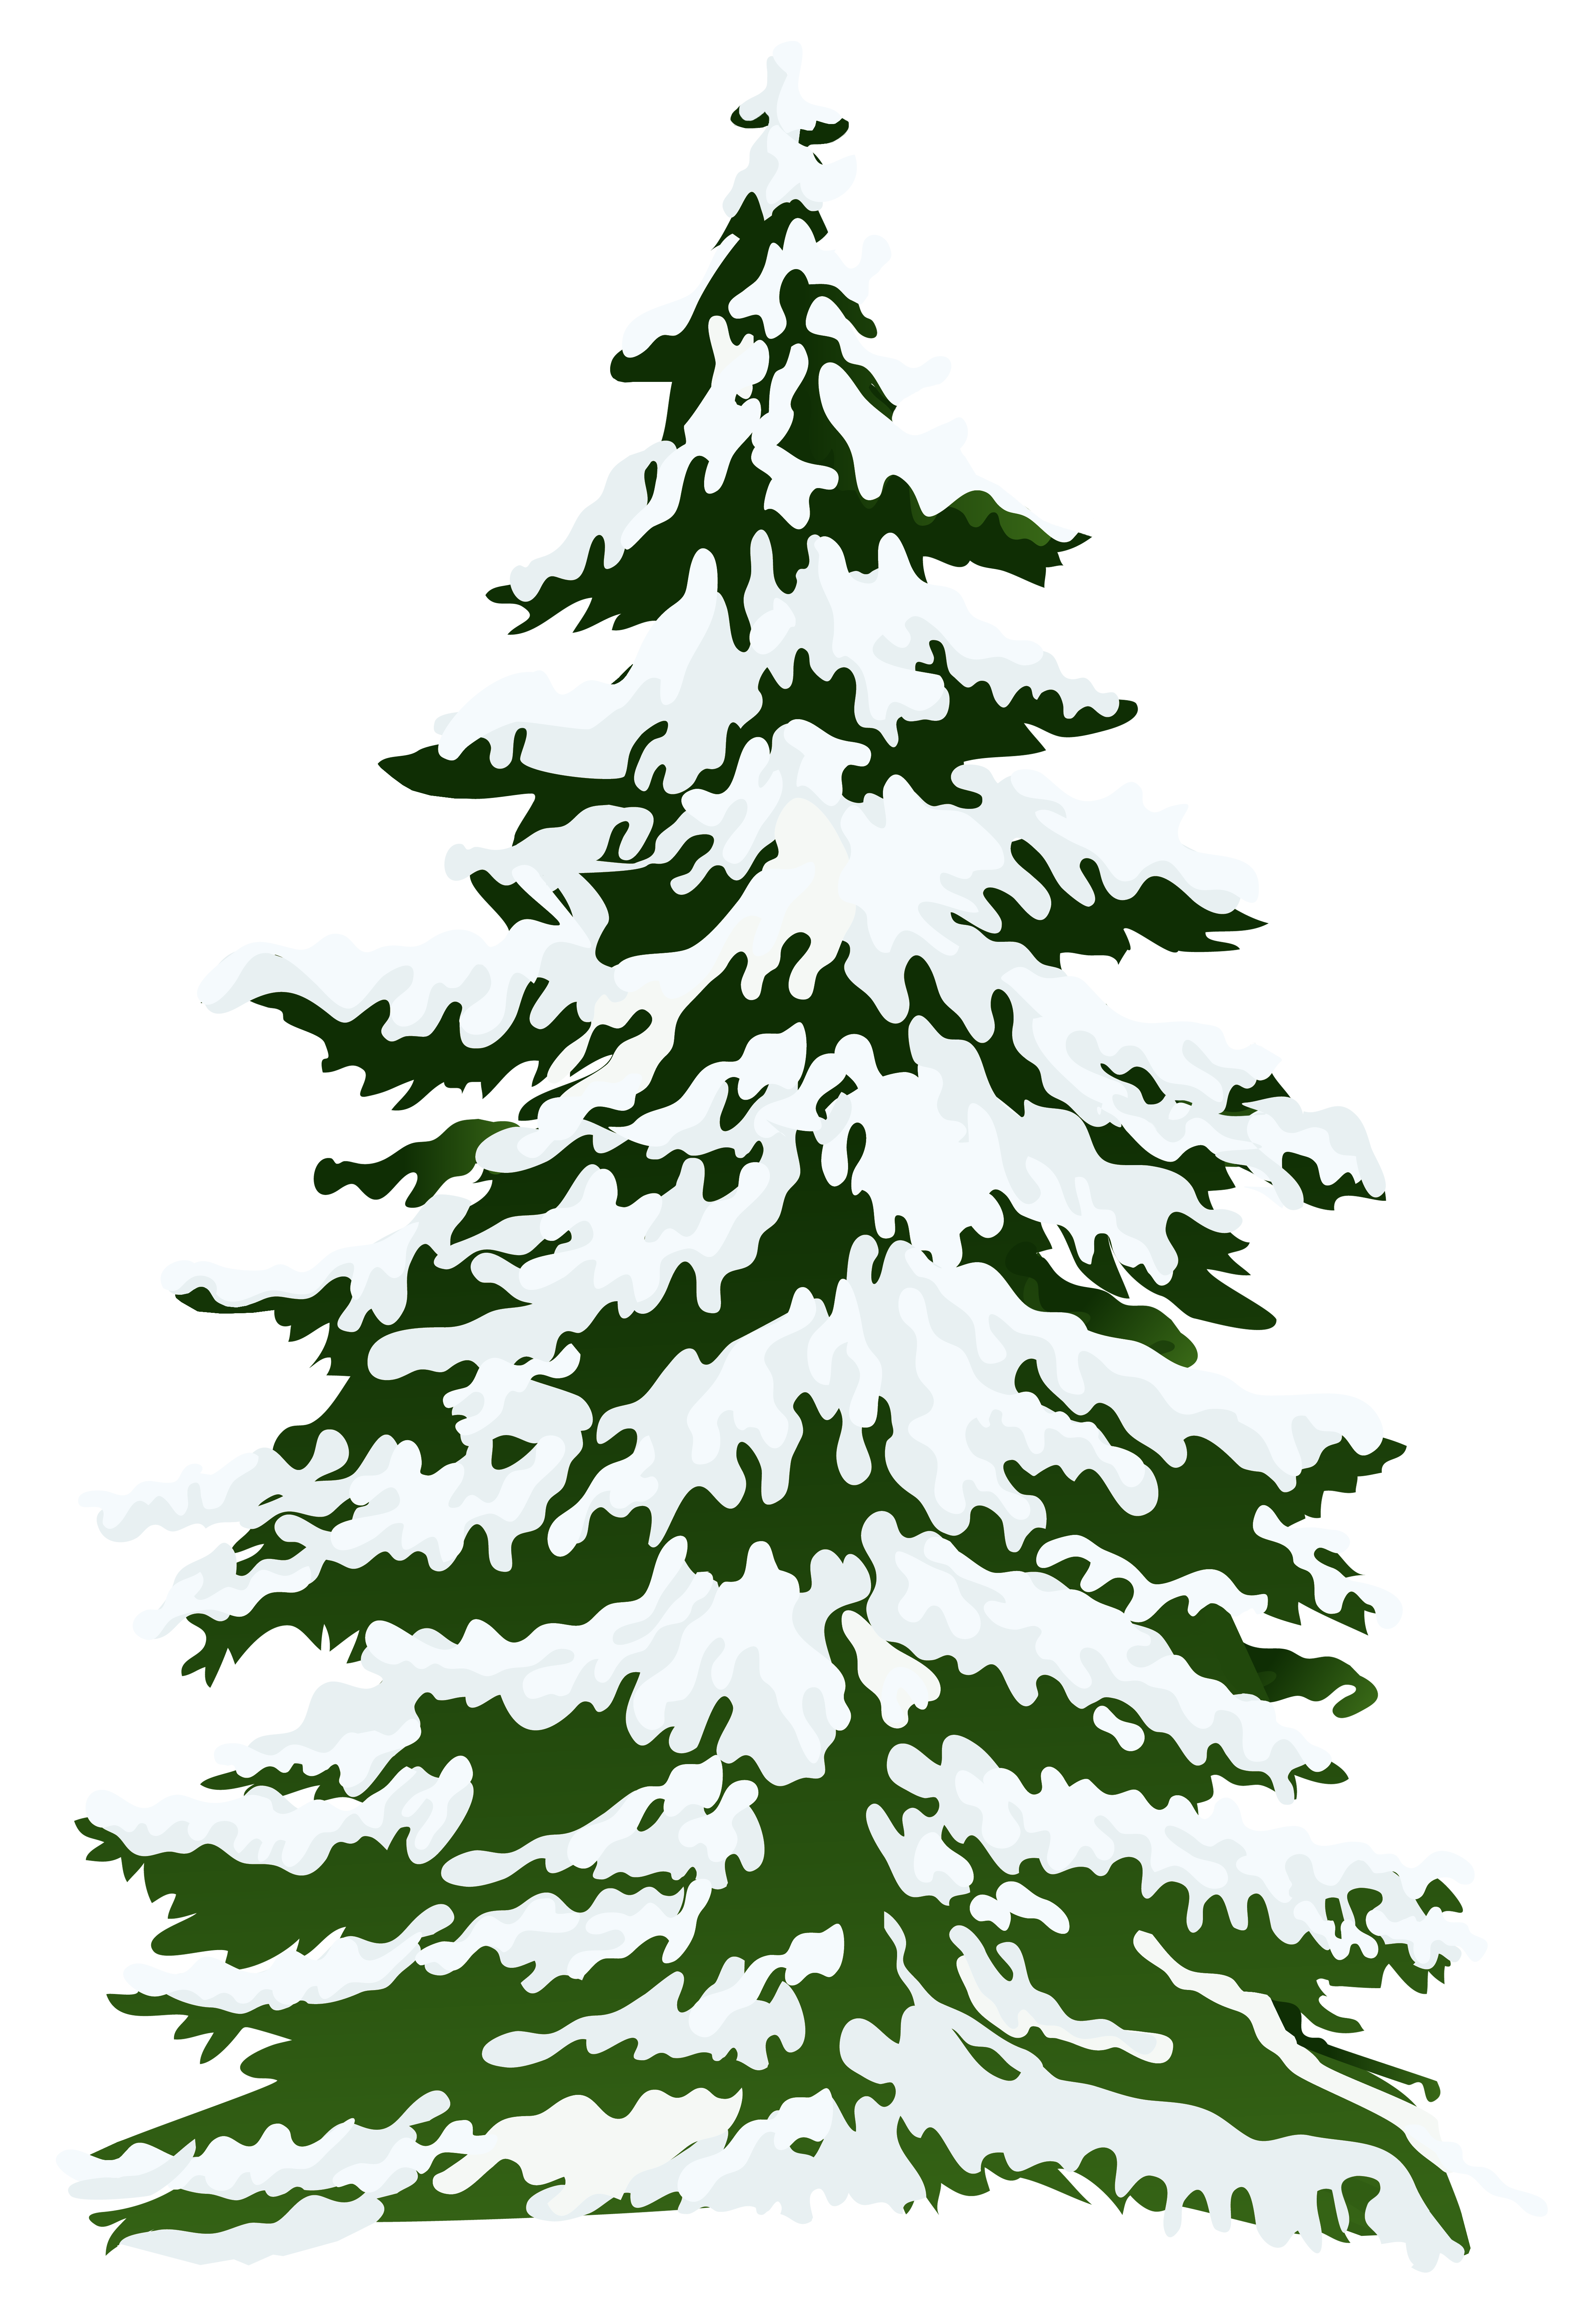 snowy pine trees